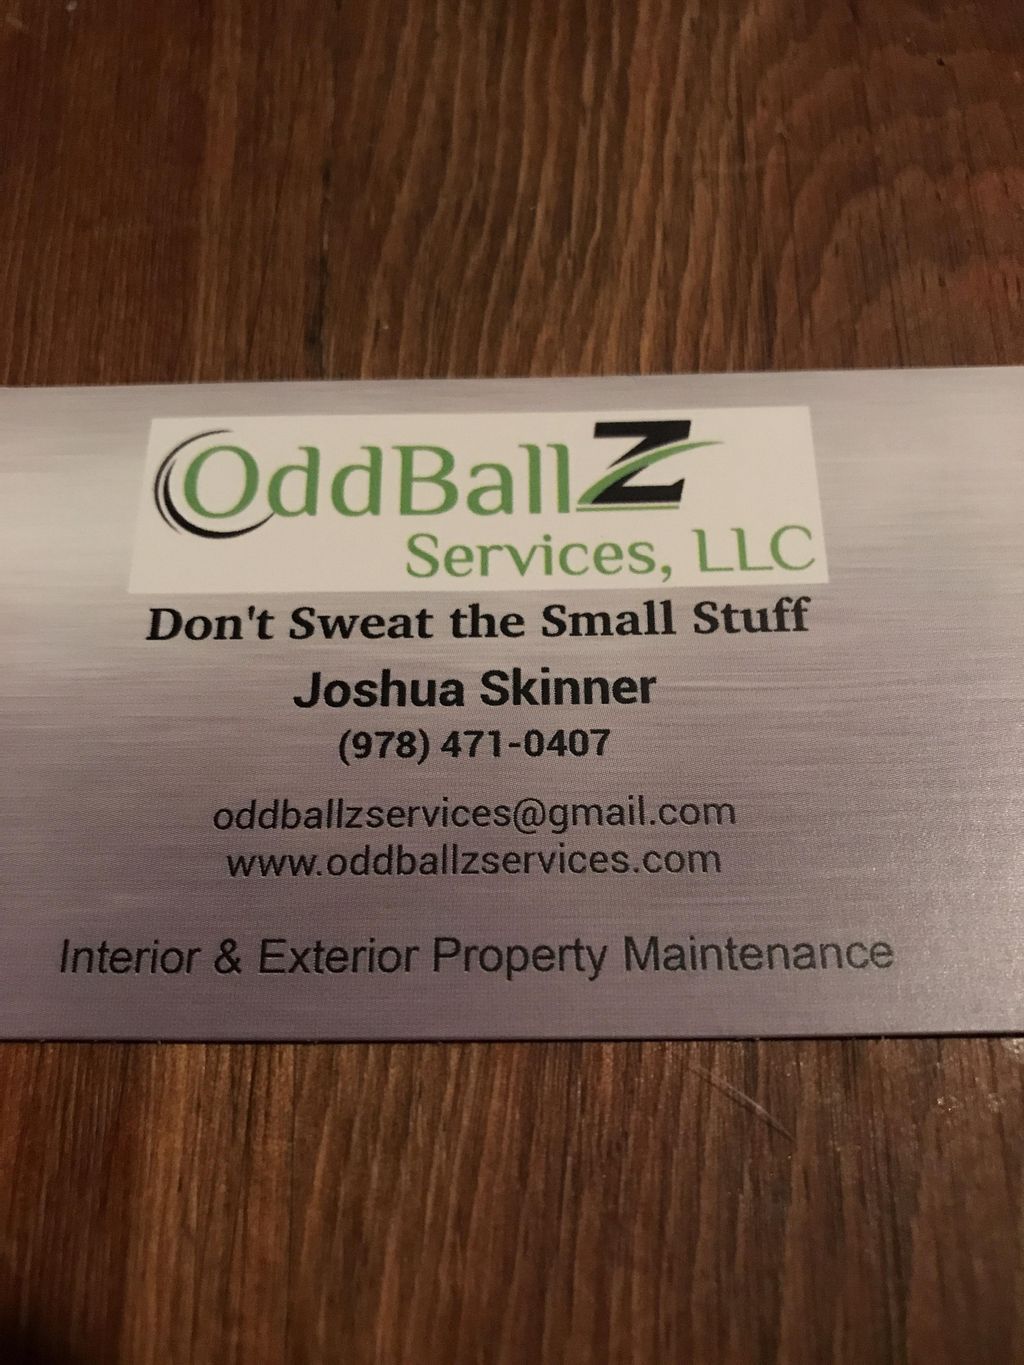 Oddballz Services LLC